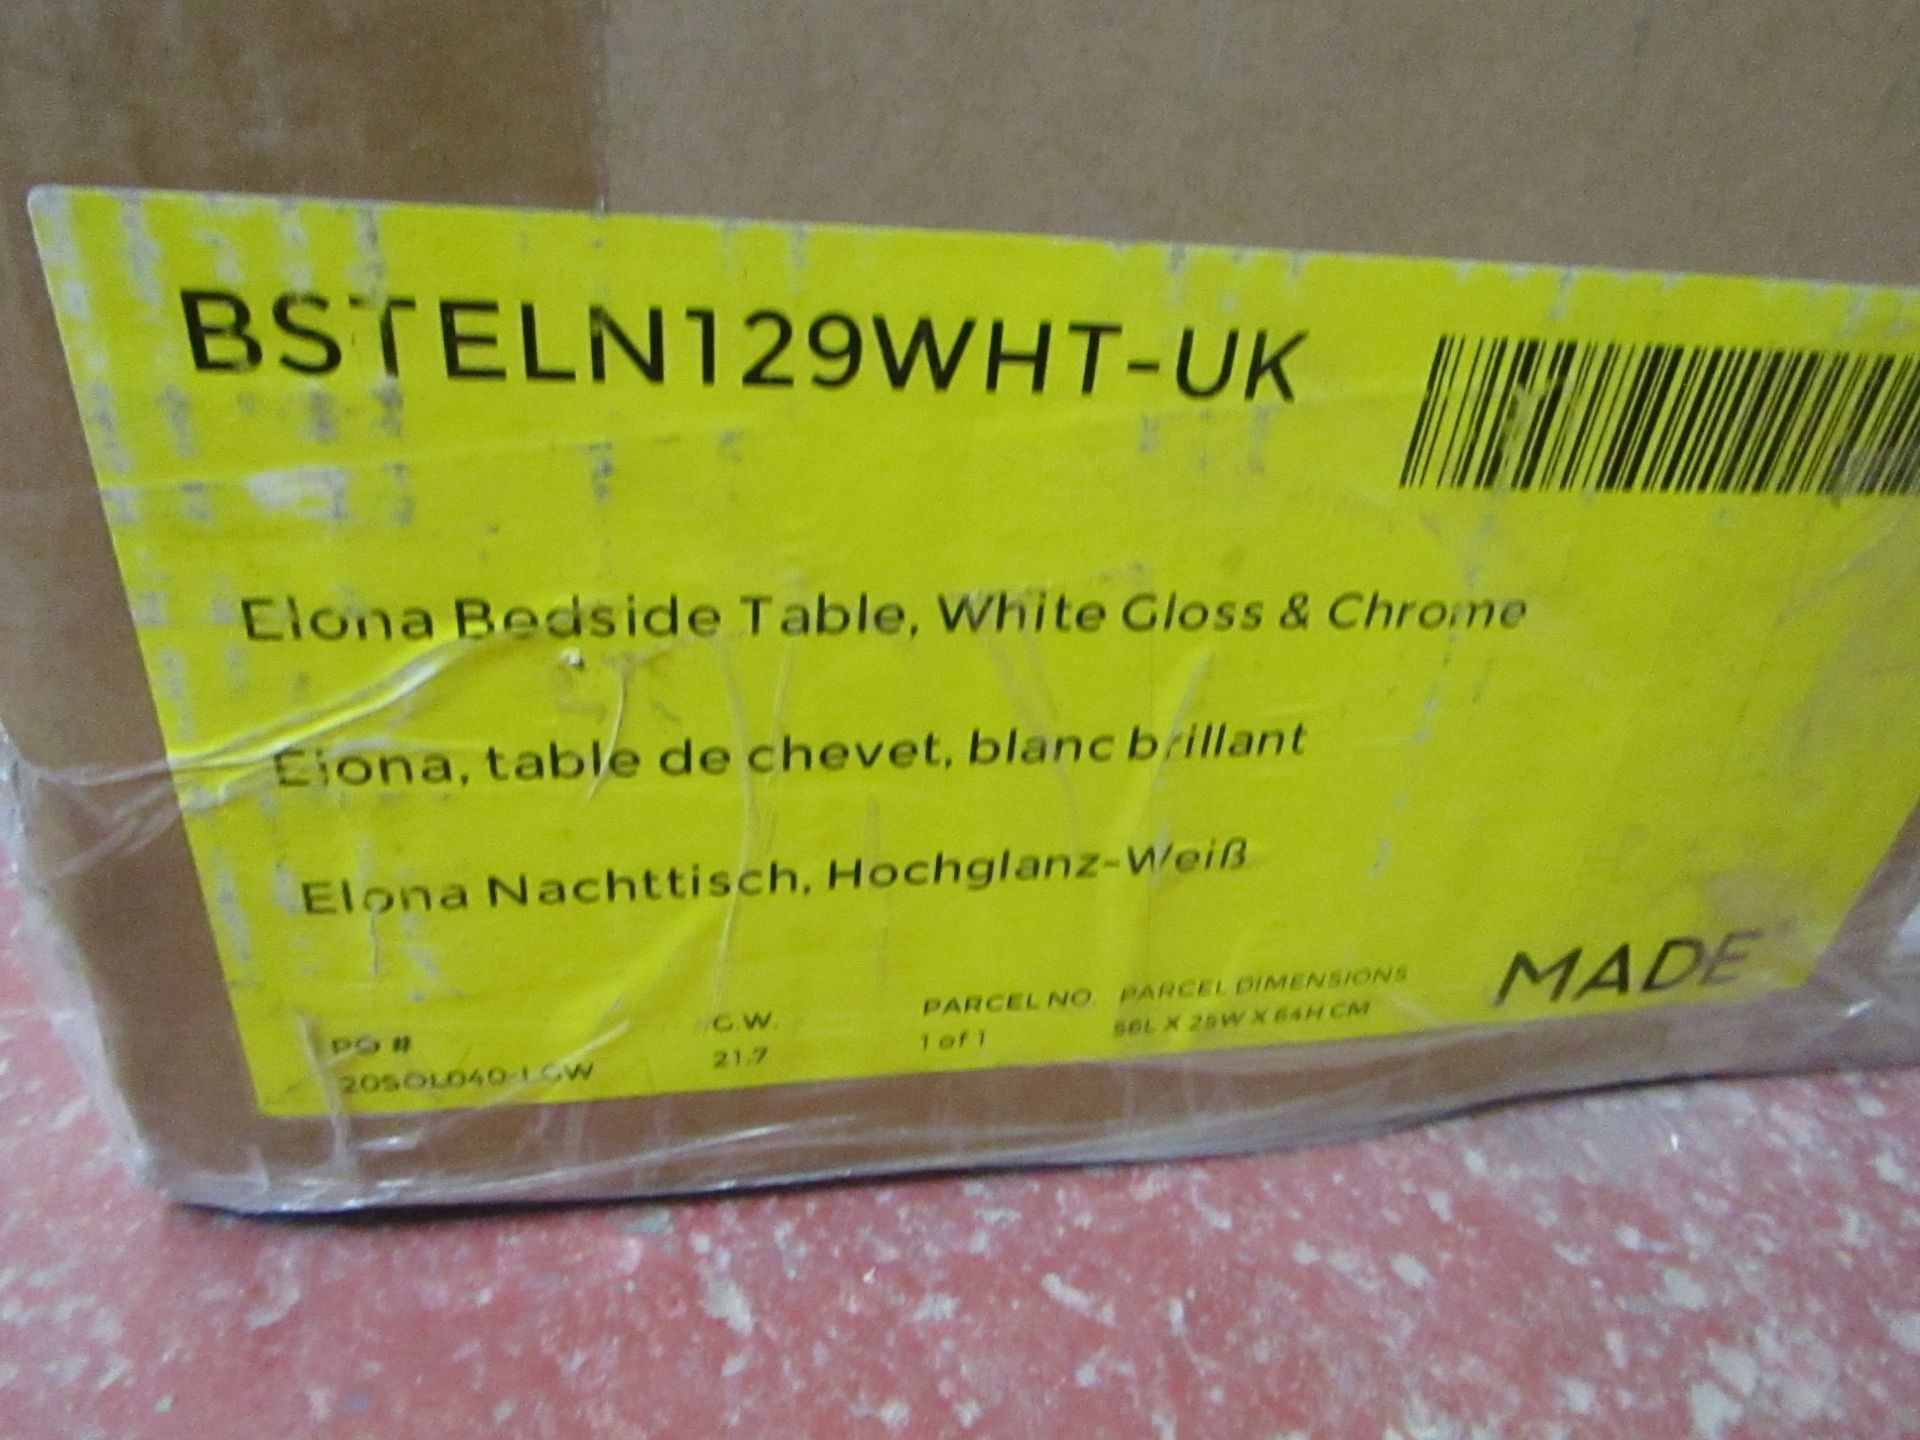 1 x Made.com Elona Bedside Table White Gloss and Chrome RRP œ129 SKU MAD-BSTELN129WHT-UK TOTAL RRP